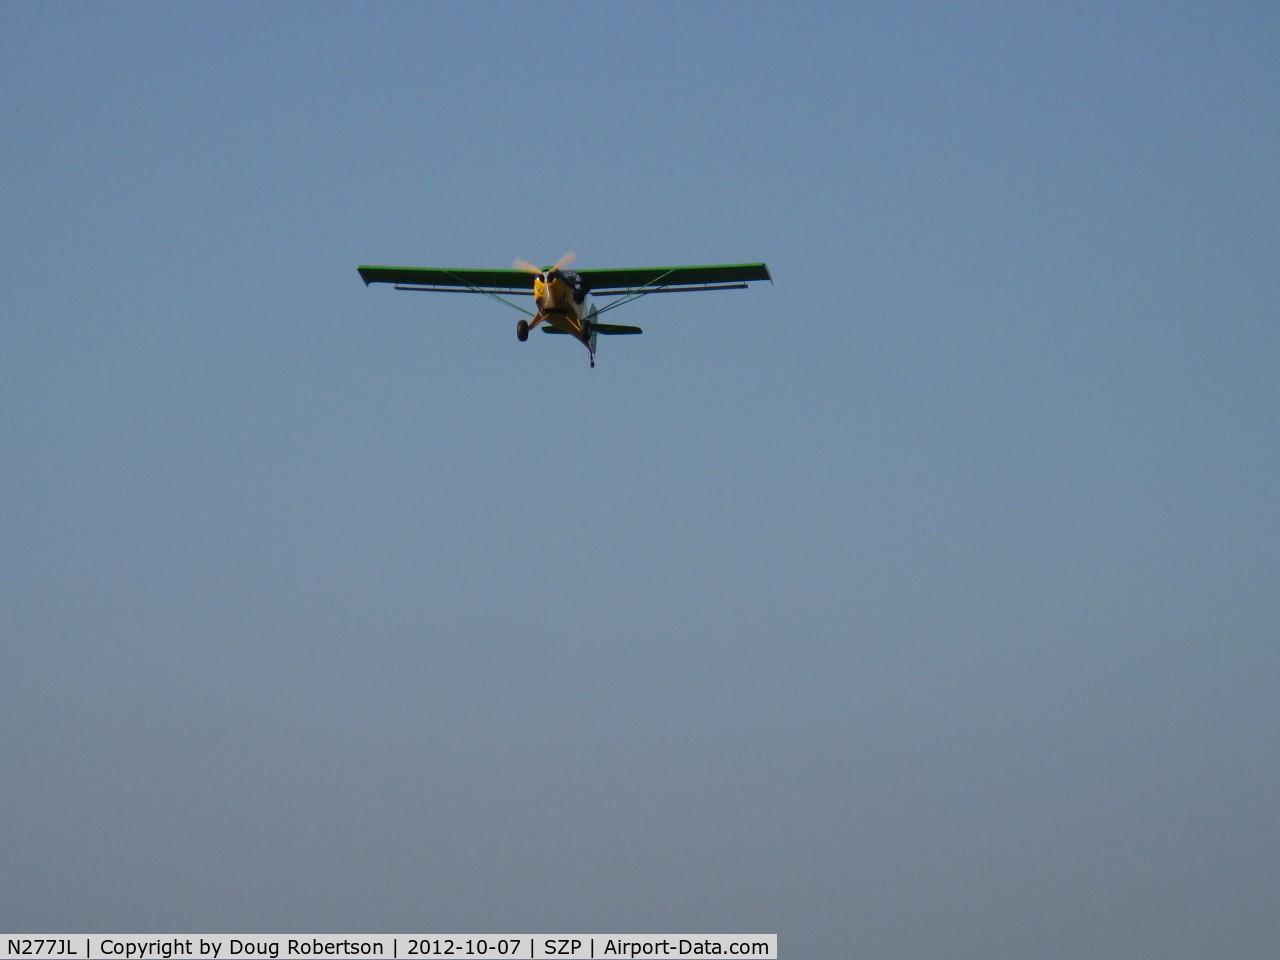 N277JL, 1991 Denney Kitfox Model 1 C/N 122, 1991 Lawrence KITFOX, Rotax, takeoff climb Rwy 04